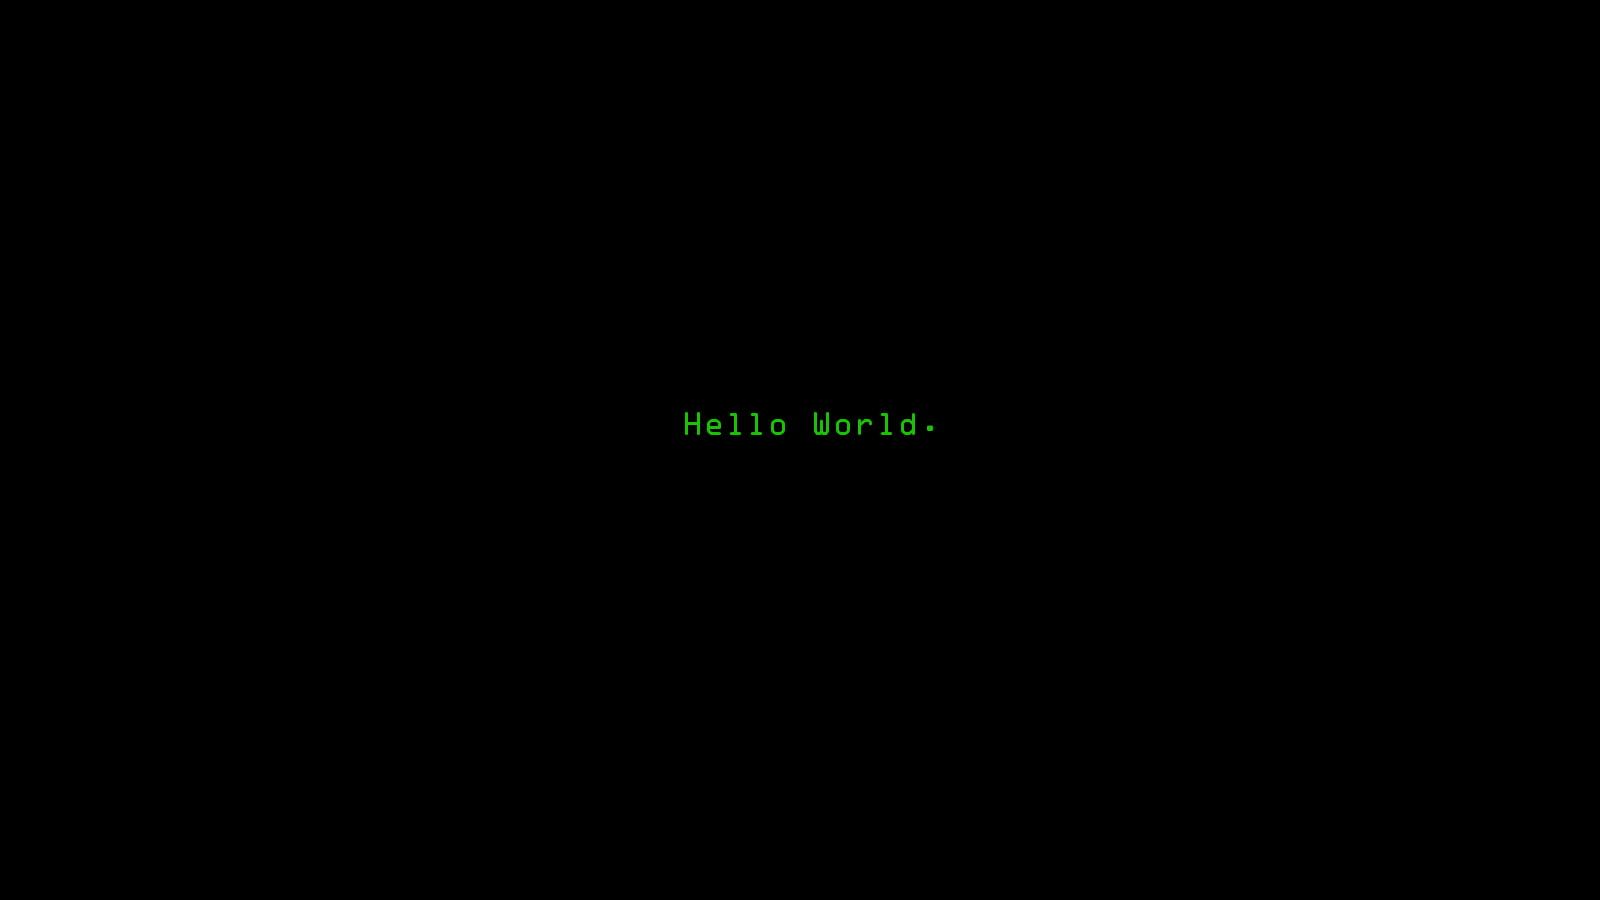 Hello World text #minimalism #code #quote #text digital art Hello World P #wallpaper #hdwallpaper #desktop. Coding, Coding quotes, Dark wallpaper